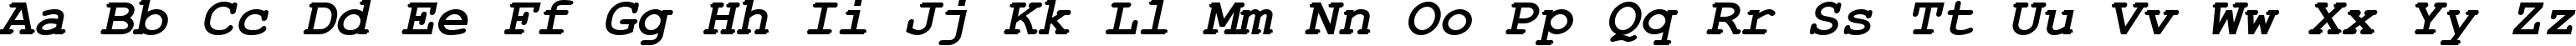 Пример написания английского алфавита шрифтом Courier New Bold Italic